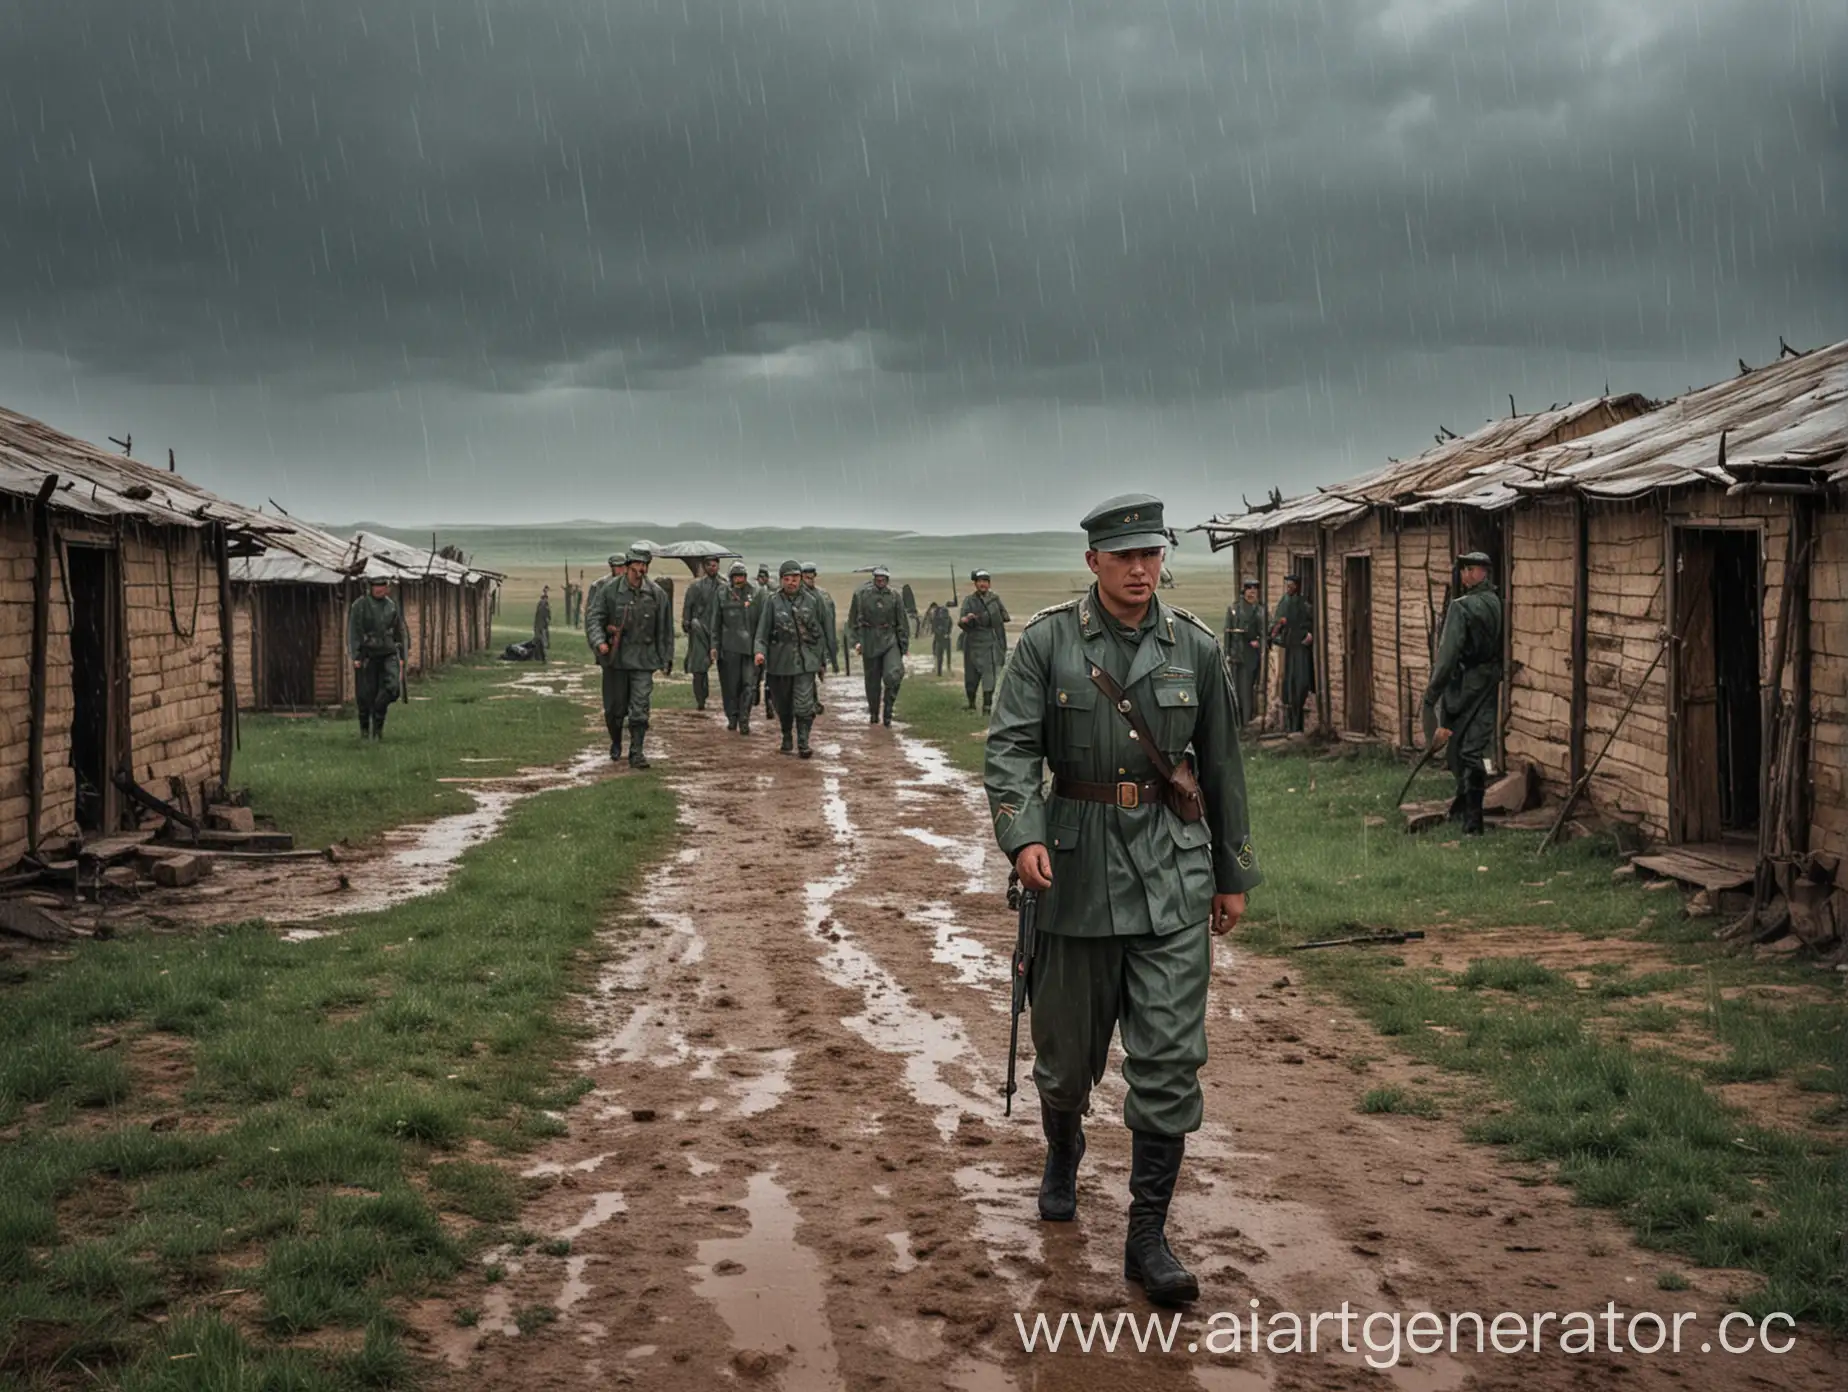 Kazakhstani-Steppe-Rain-Soldiers-in-Barracks